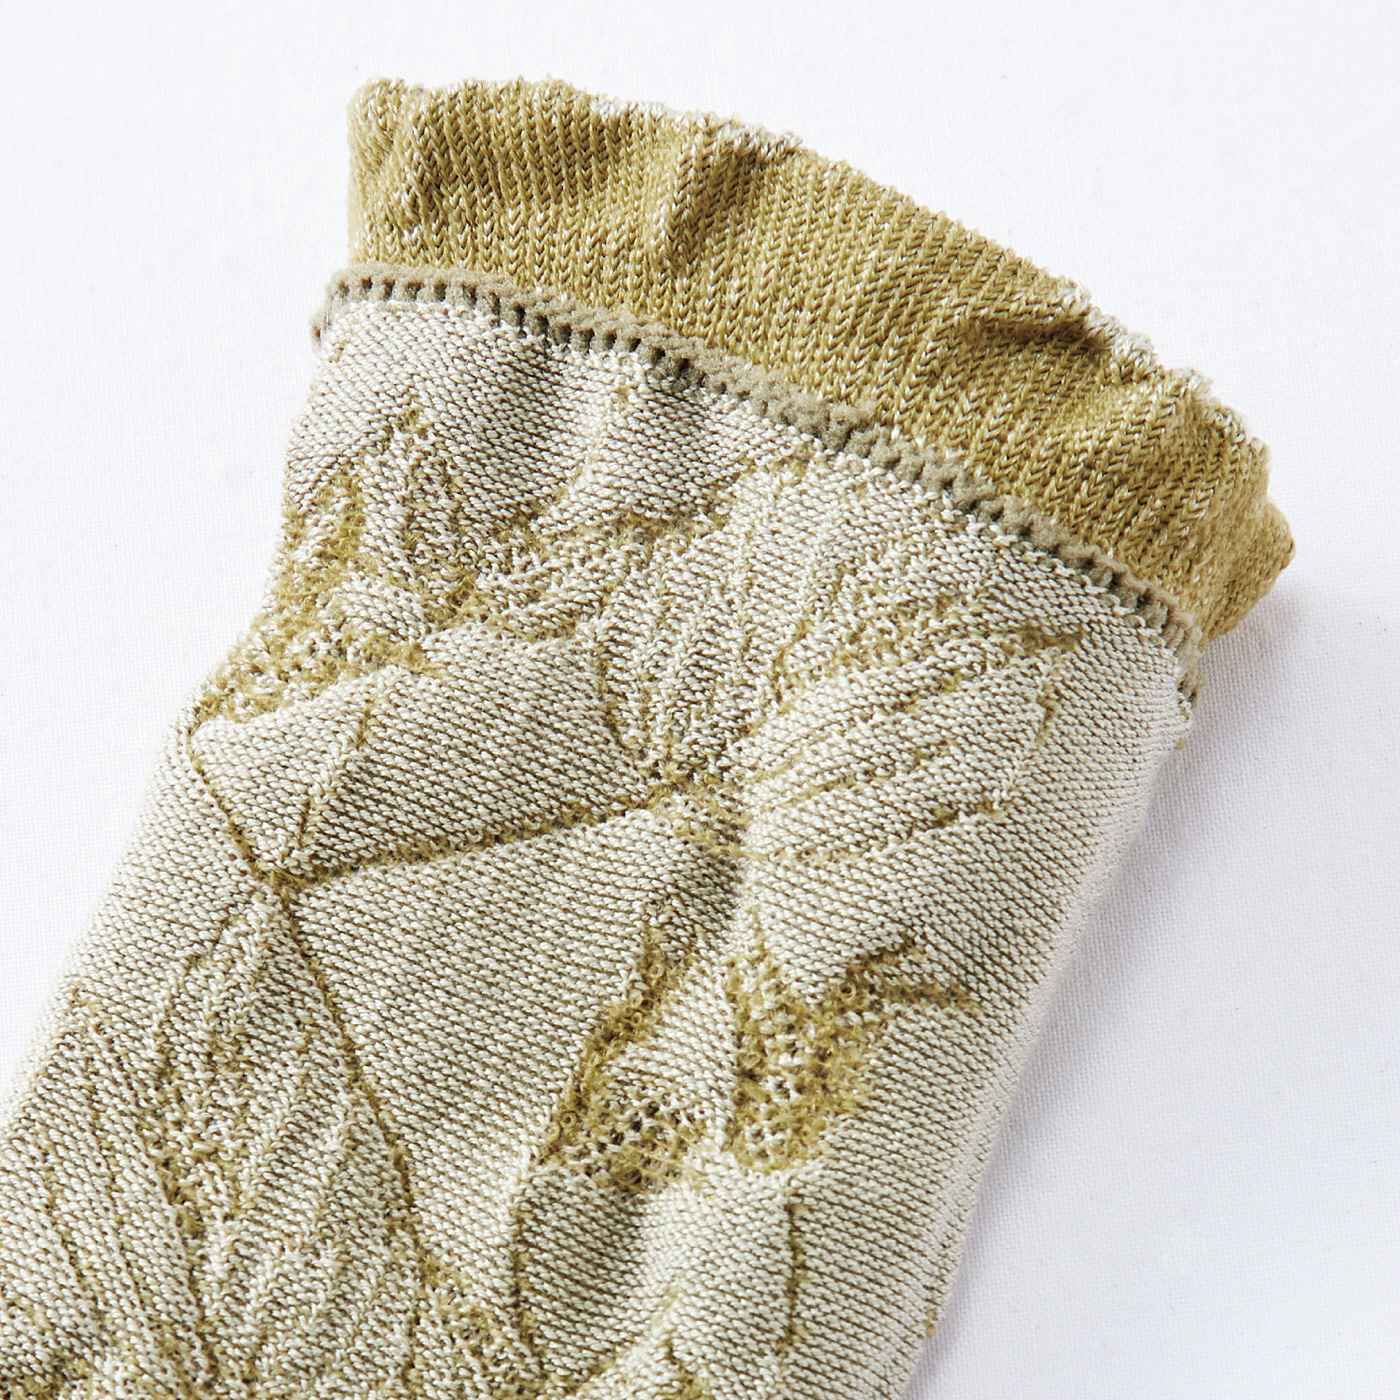 SAANA JA OLLI|サーナ ヤ オッリ　フロート編みで裏渡りが少ない 肌当たり滑らか 肌側シルク混ソックスの会|肌側は糸の裏渡りが少なく、はいている間のごろつきを軽減。